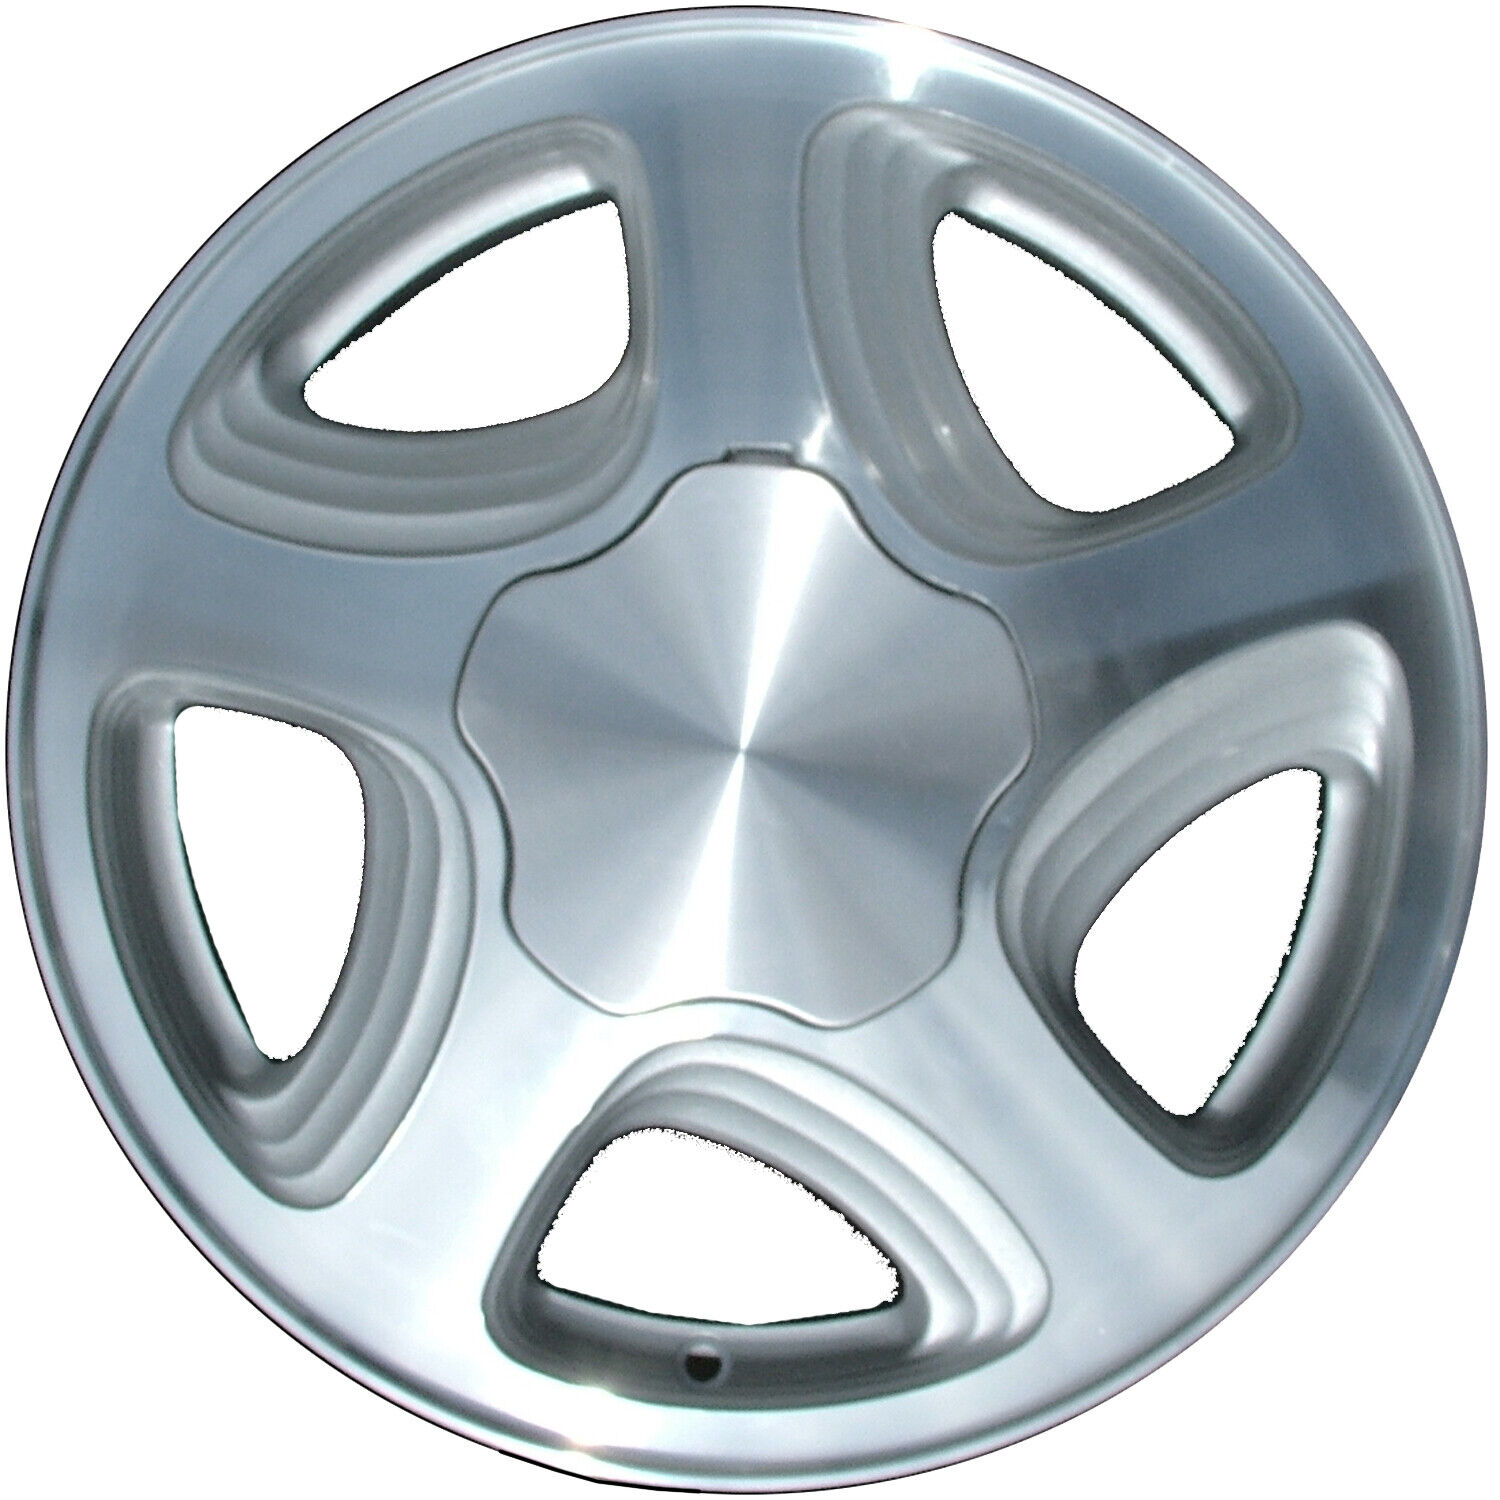 05085 Reconditioned OEM Aluminum Wheel 16x6.5 fits 2000-2005 Monte Carlo